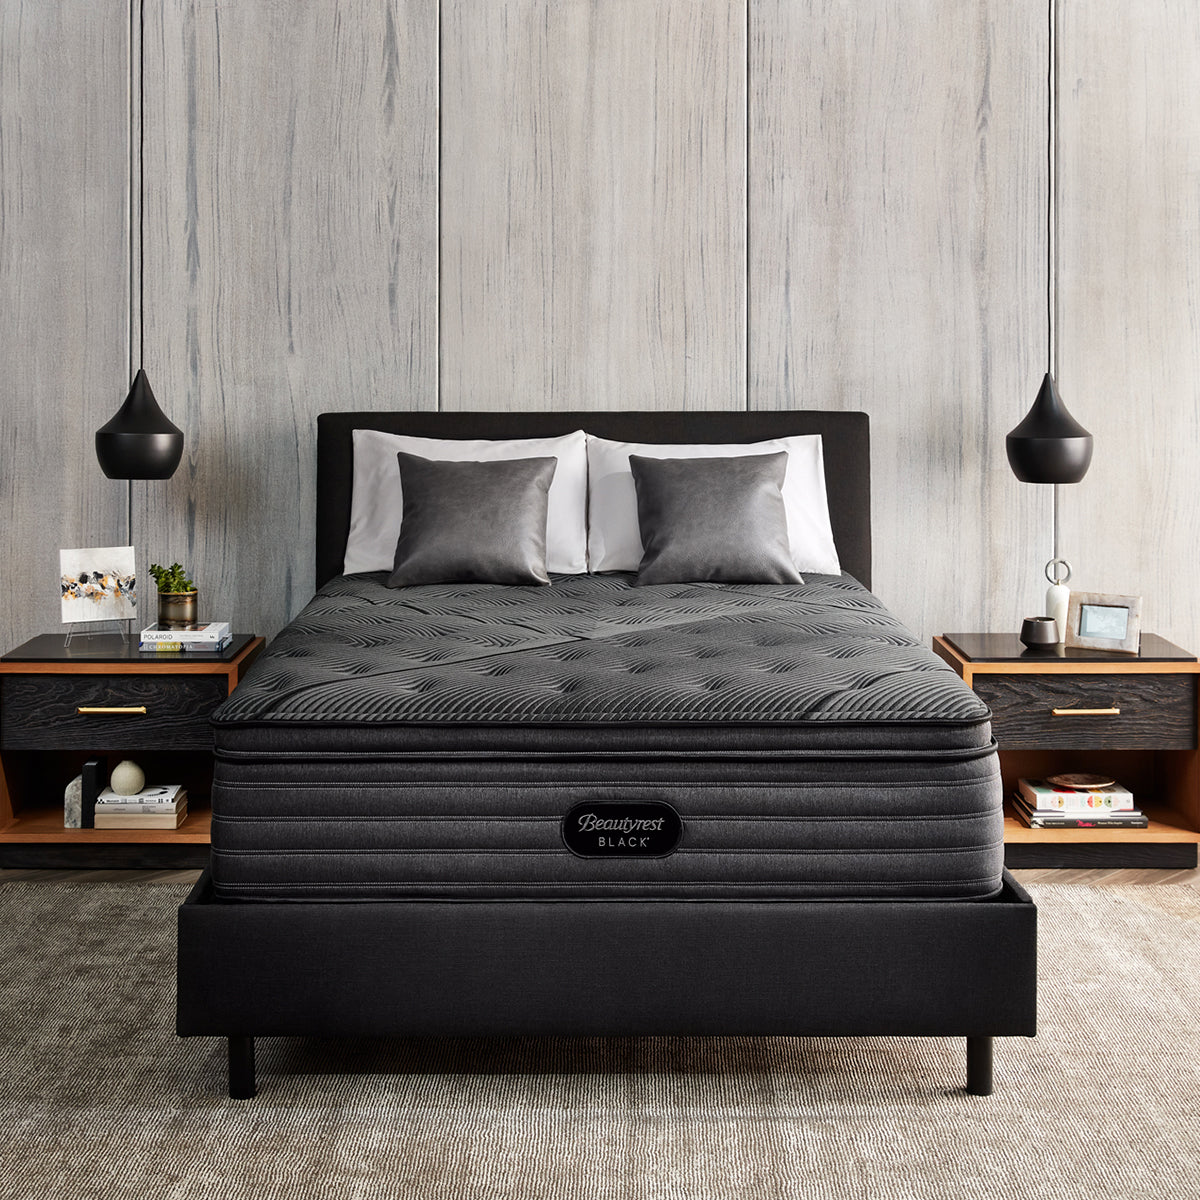 Beautyrest Black L-Class Medium Pillow Top Mattress In Bedroom Front View With Pillows